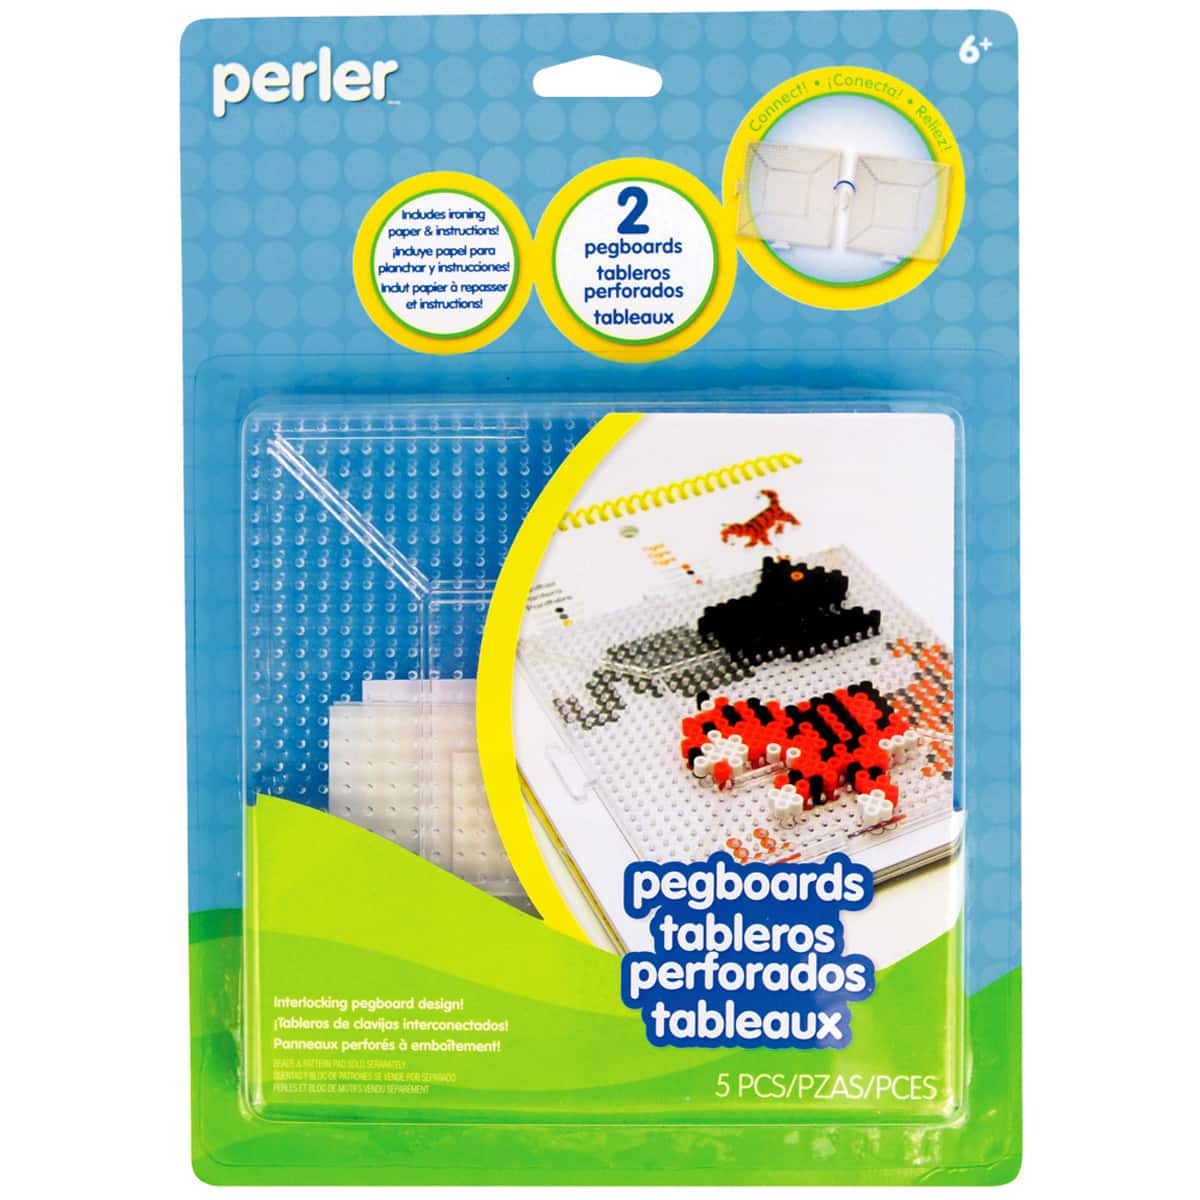 Buy Perler Beads Pegboard online